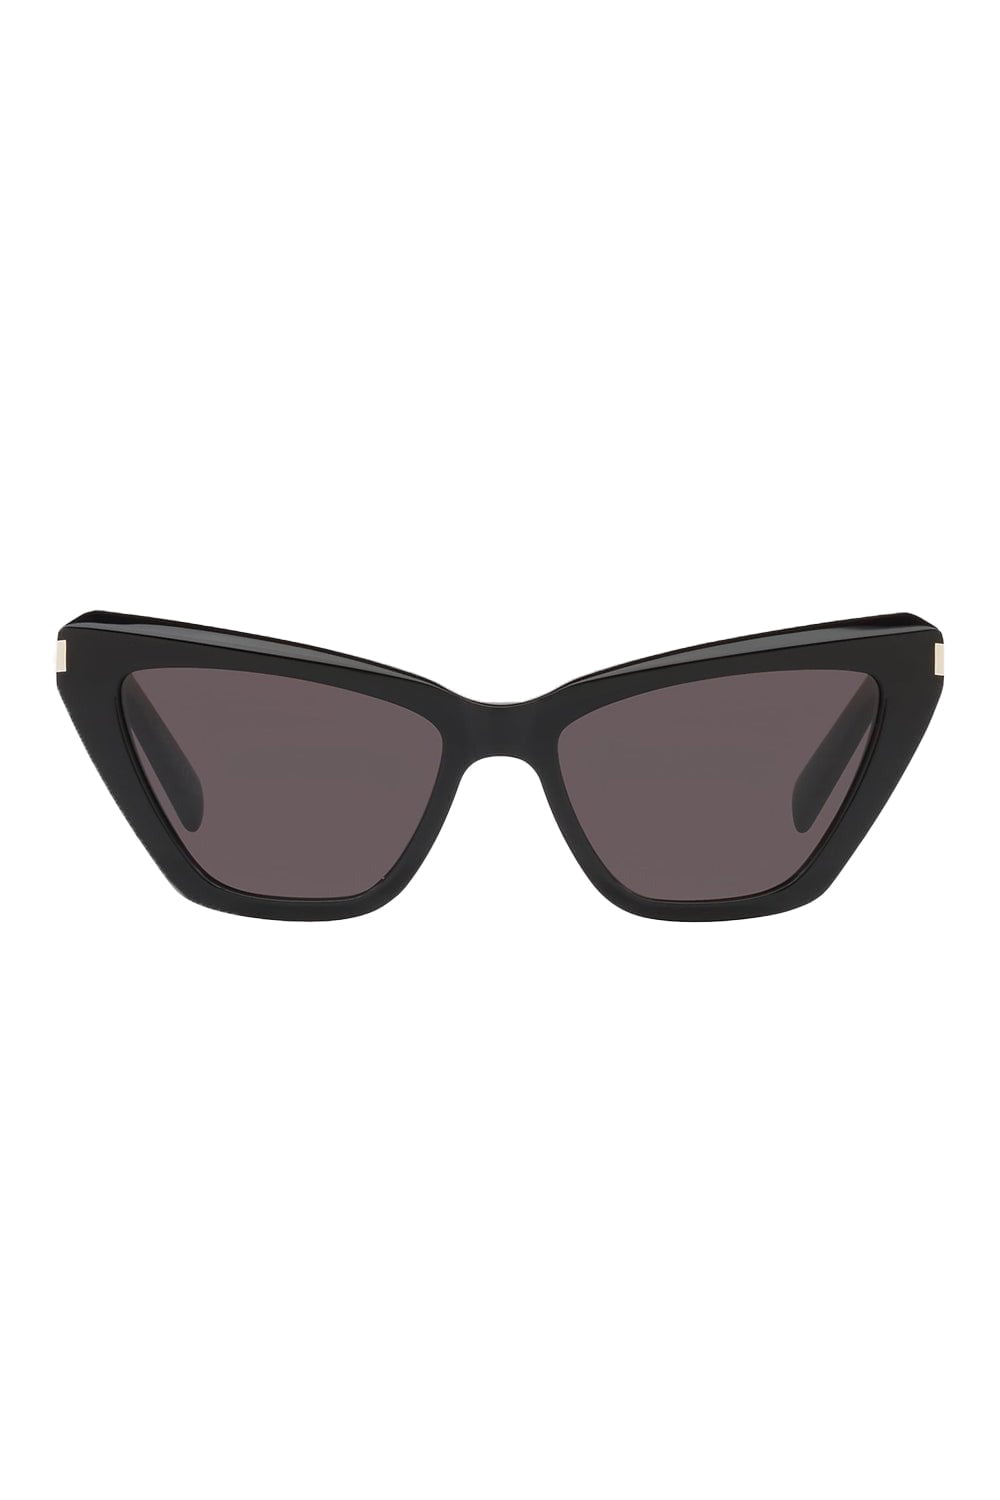 SAINT LAURENT-Cat Eye Sunglasses-BLACK/BLACK